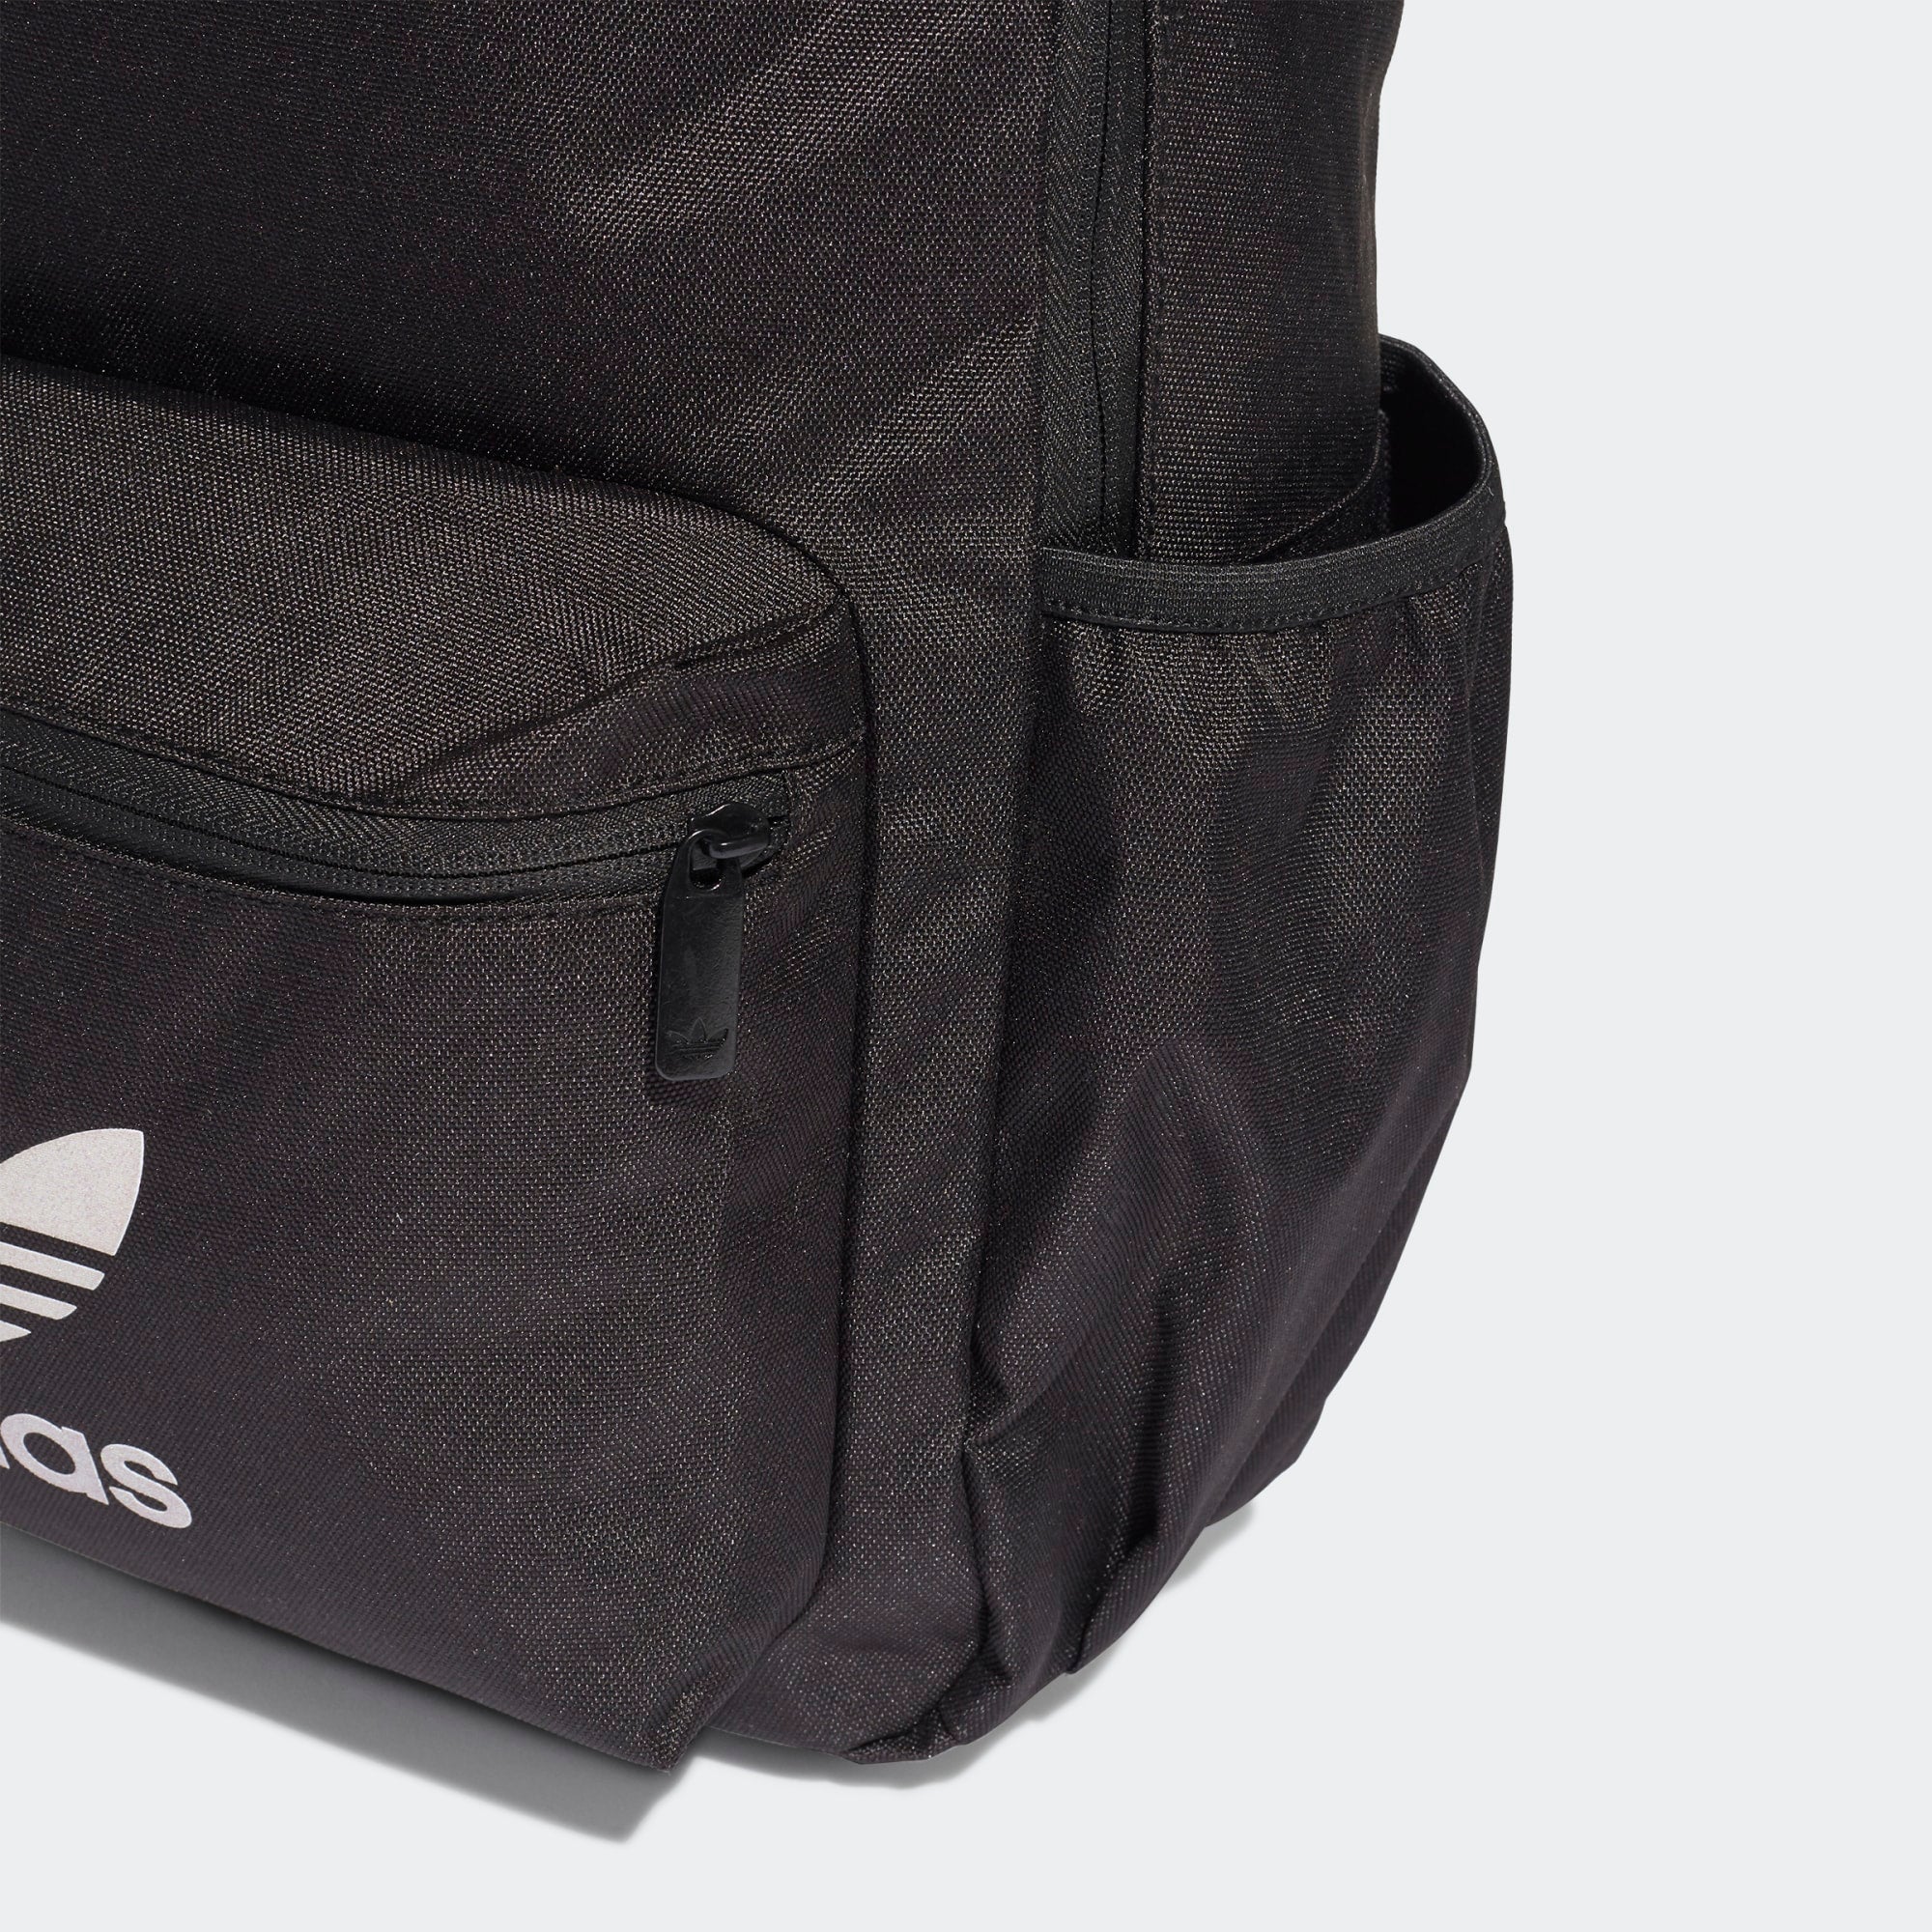 tradesports.co.uk Adidas Originals Classic Graphic Backpack - Black